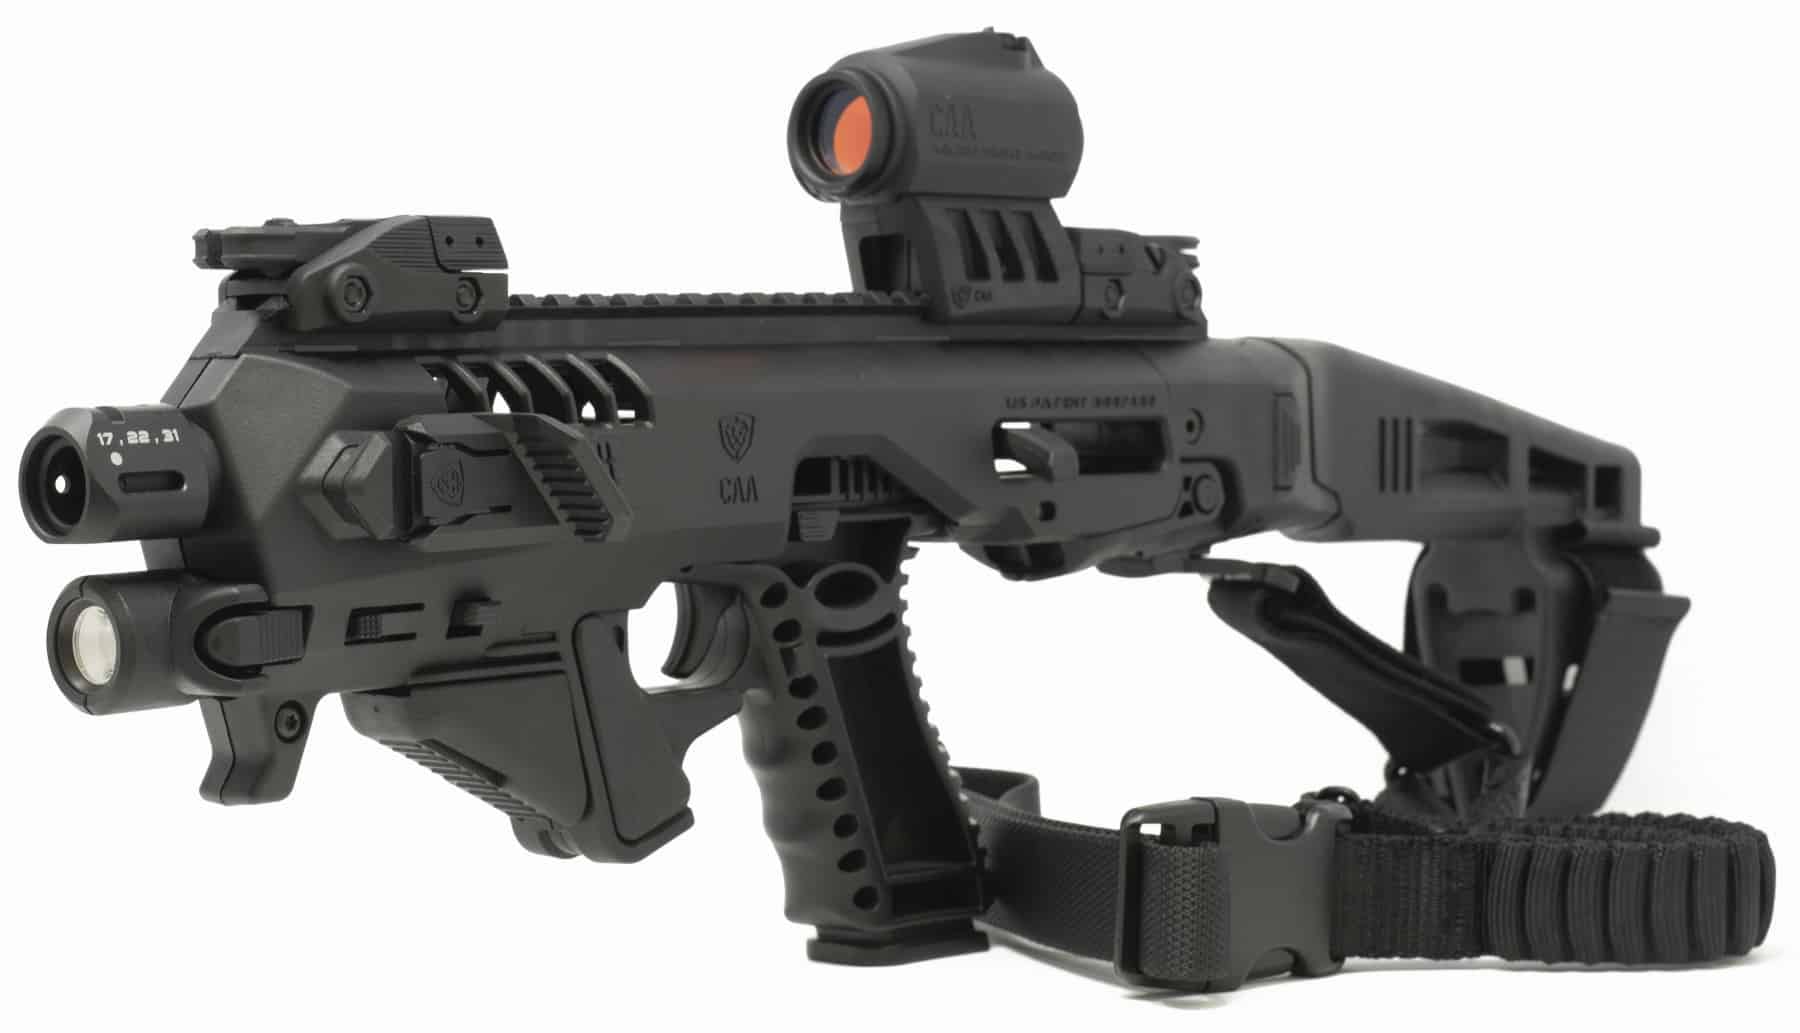 Micro Roni Glock 26&27 Stabilizer Gen 4X NEWEST PDW Conversion Kit